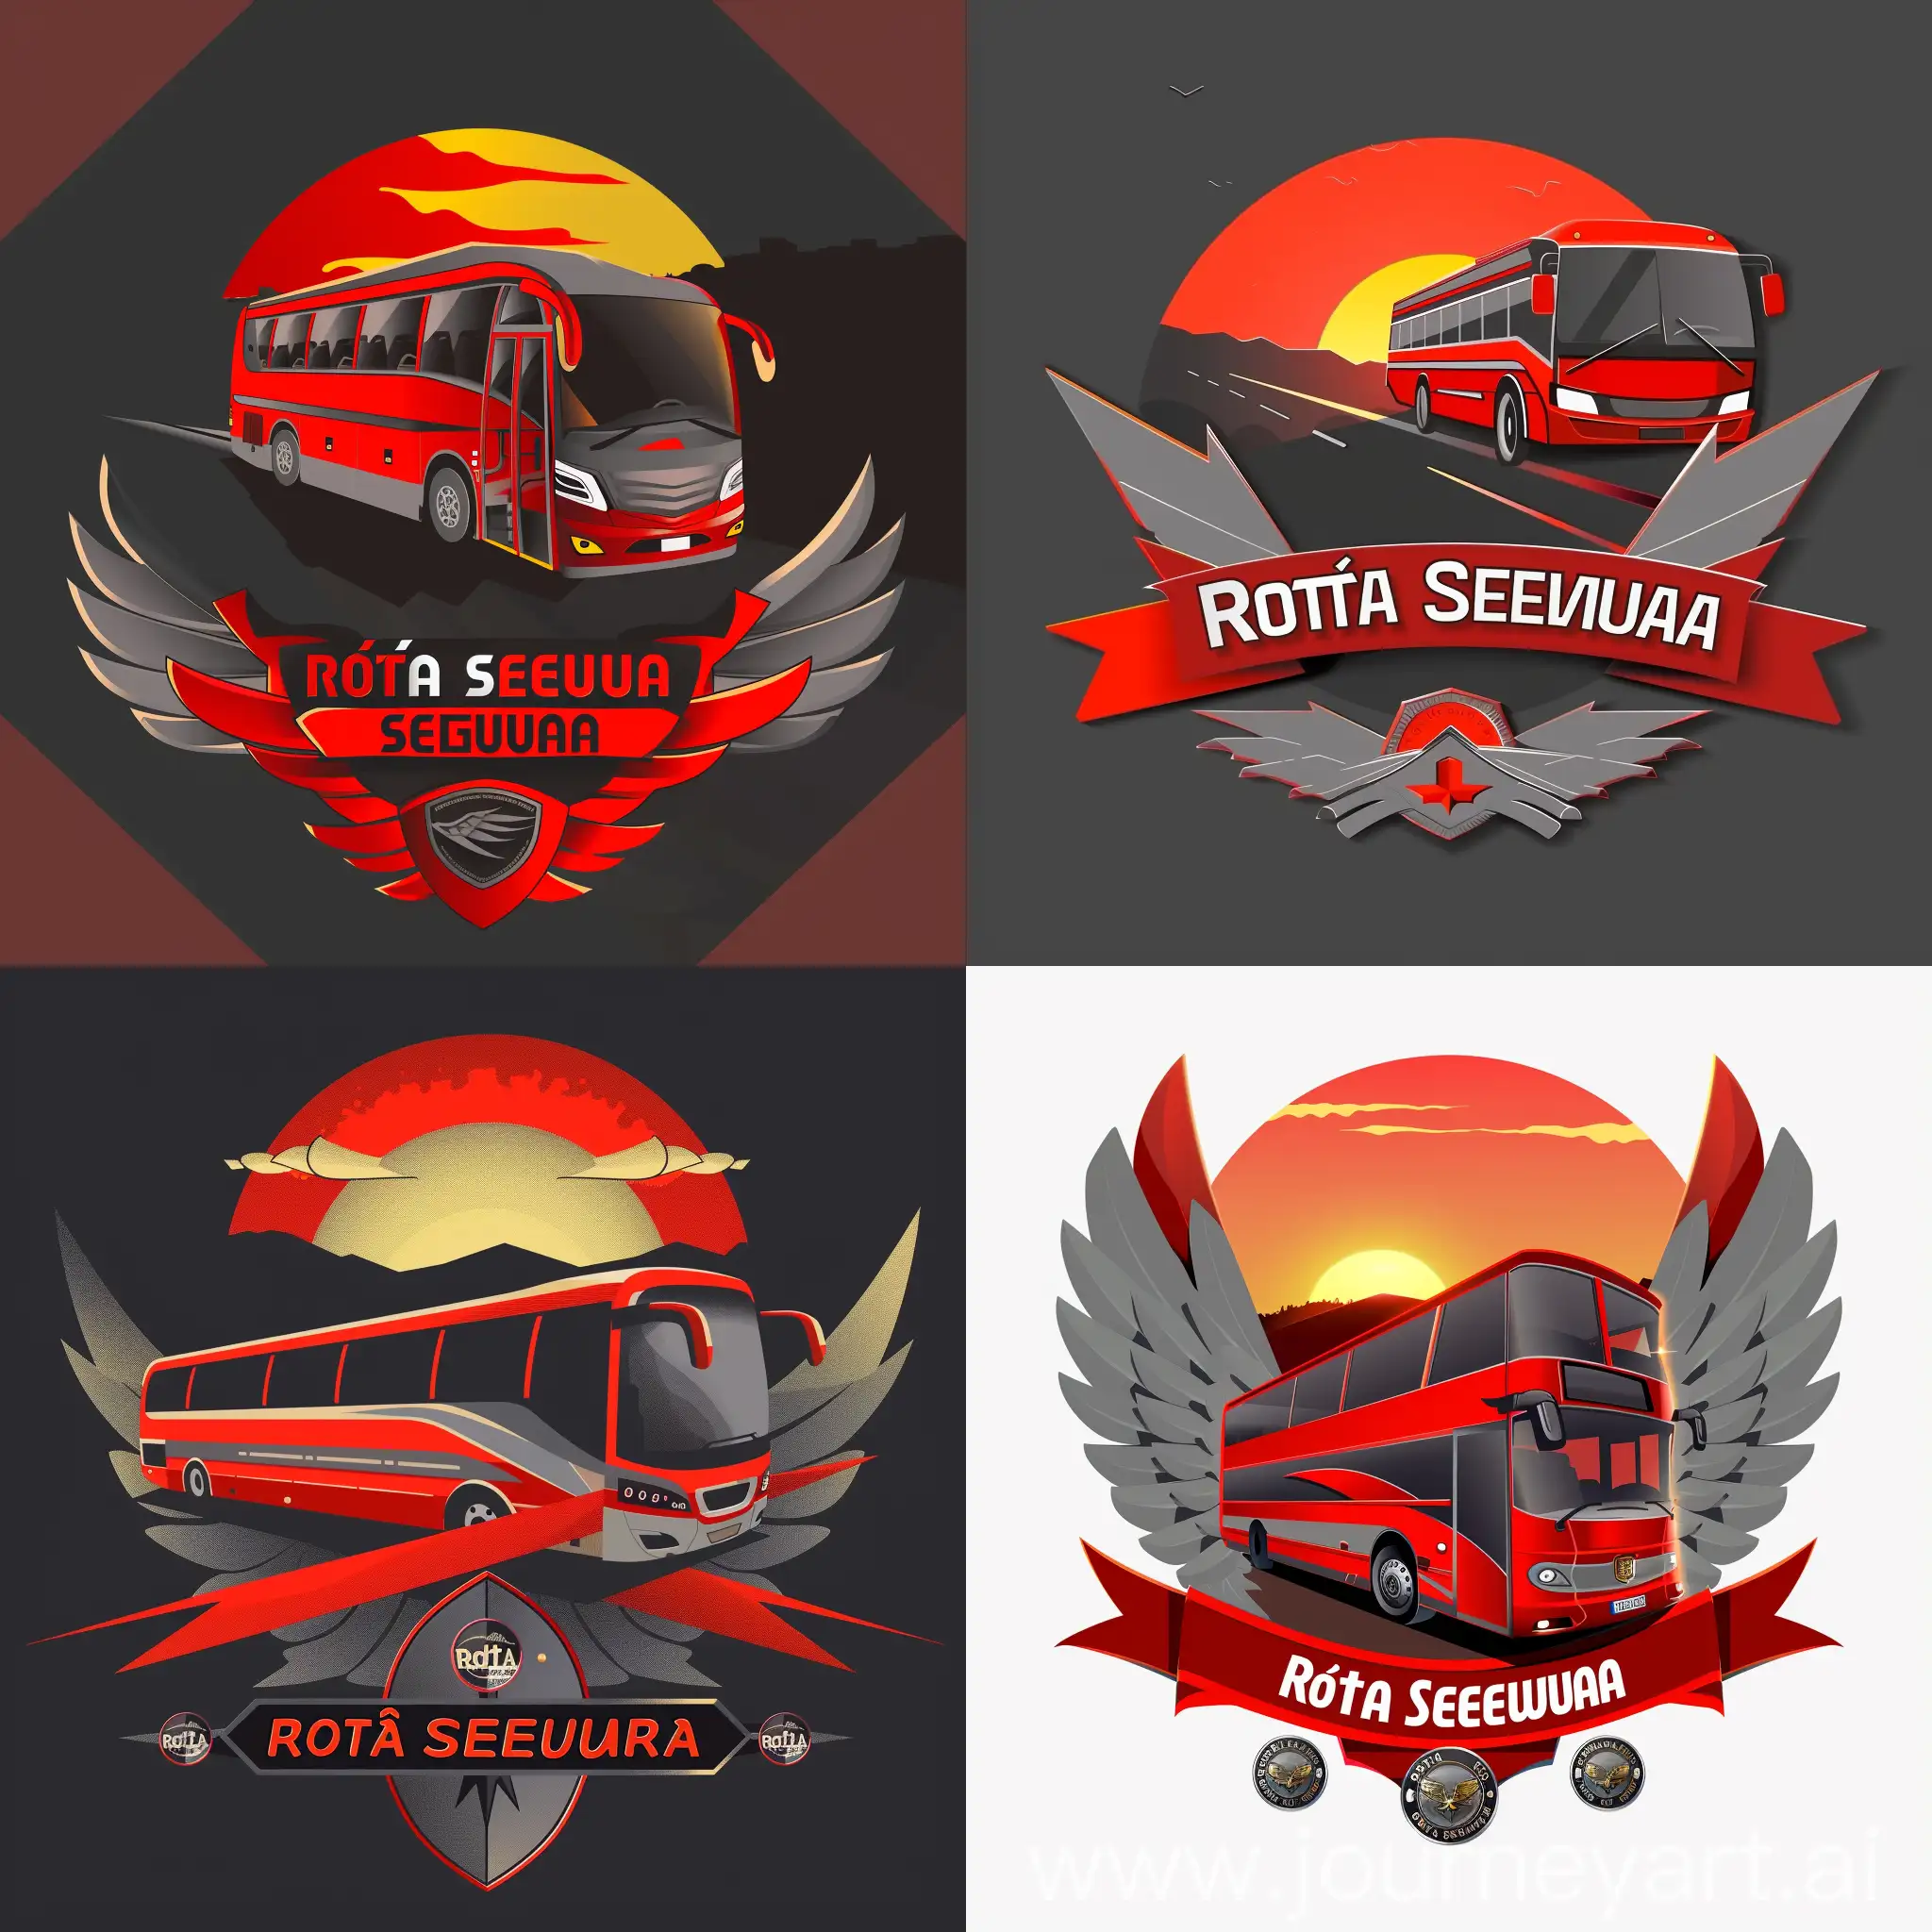 Scenic-Sunset-Journey-Red-Bus-with-Rota-Segura-Logo